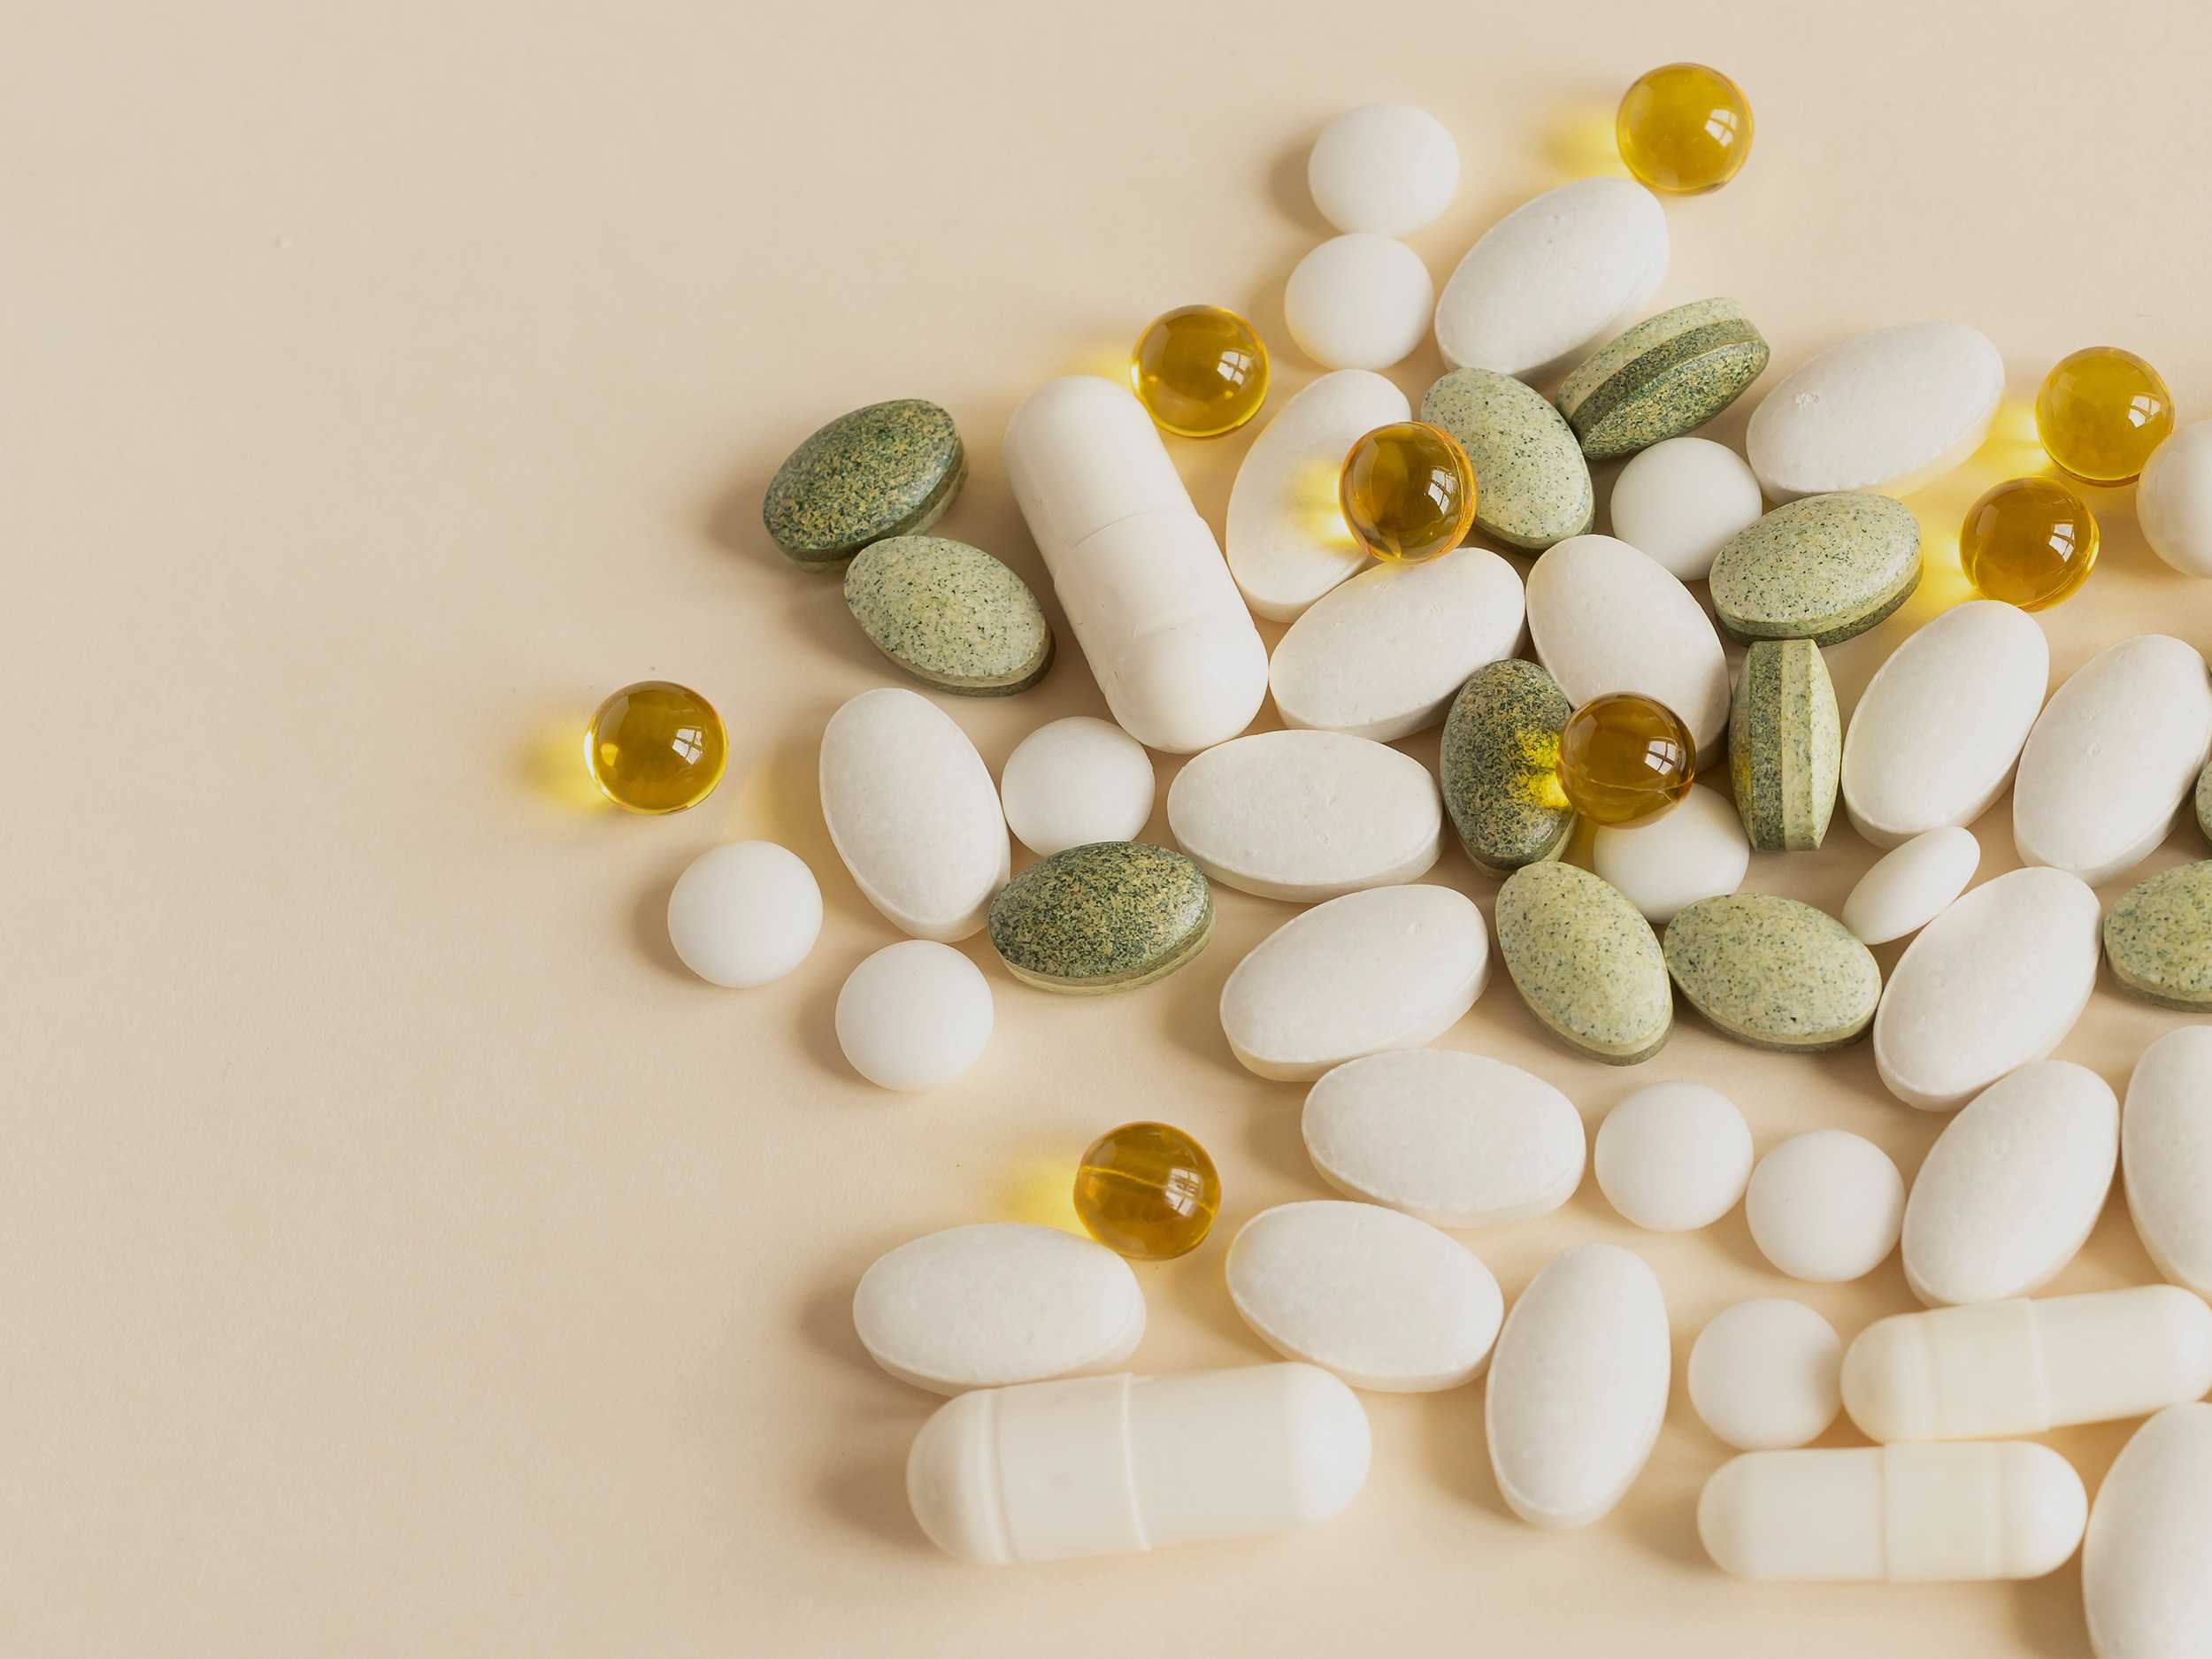 Assortment of medical supplements